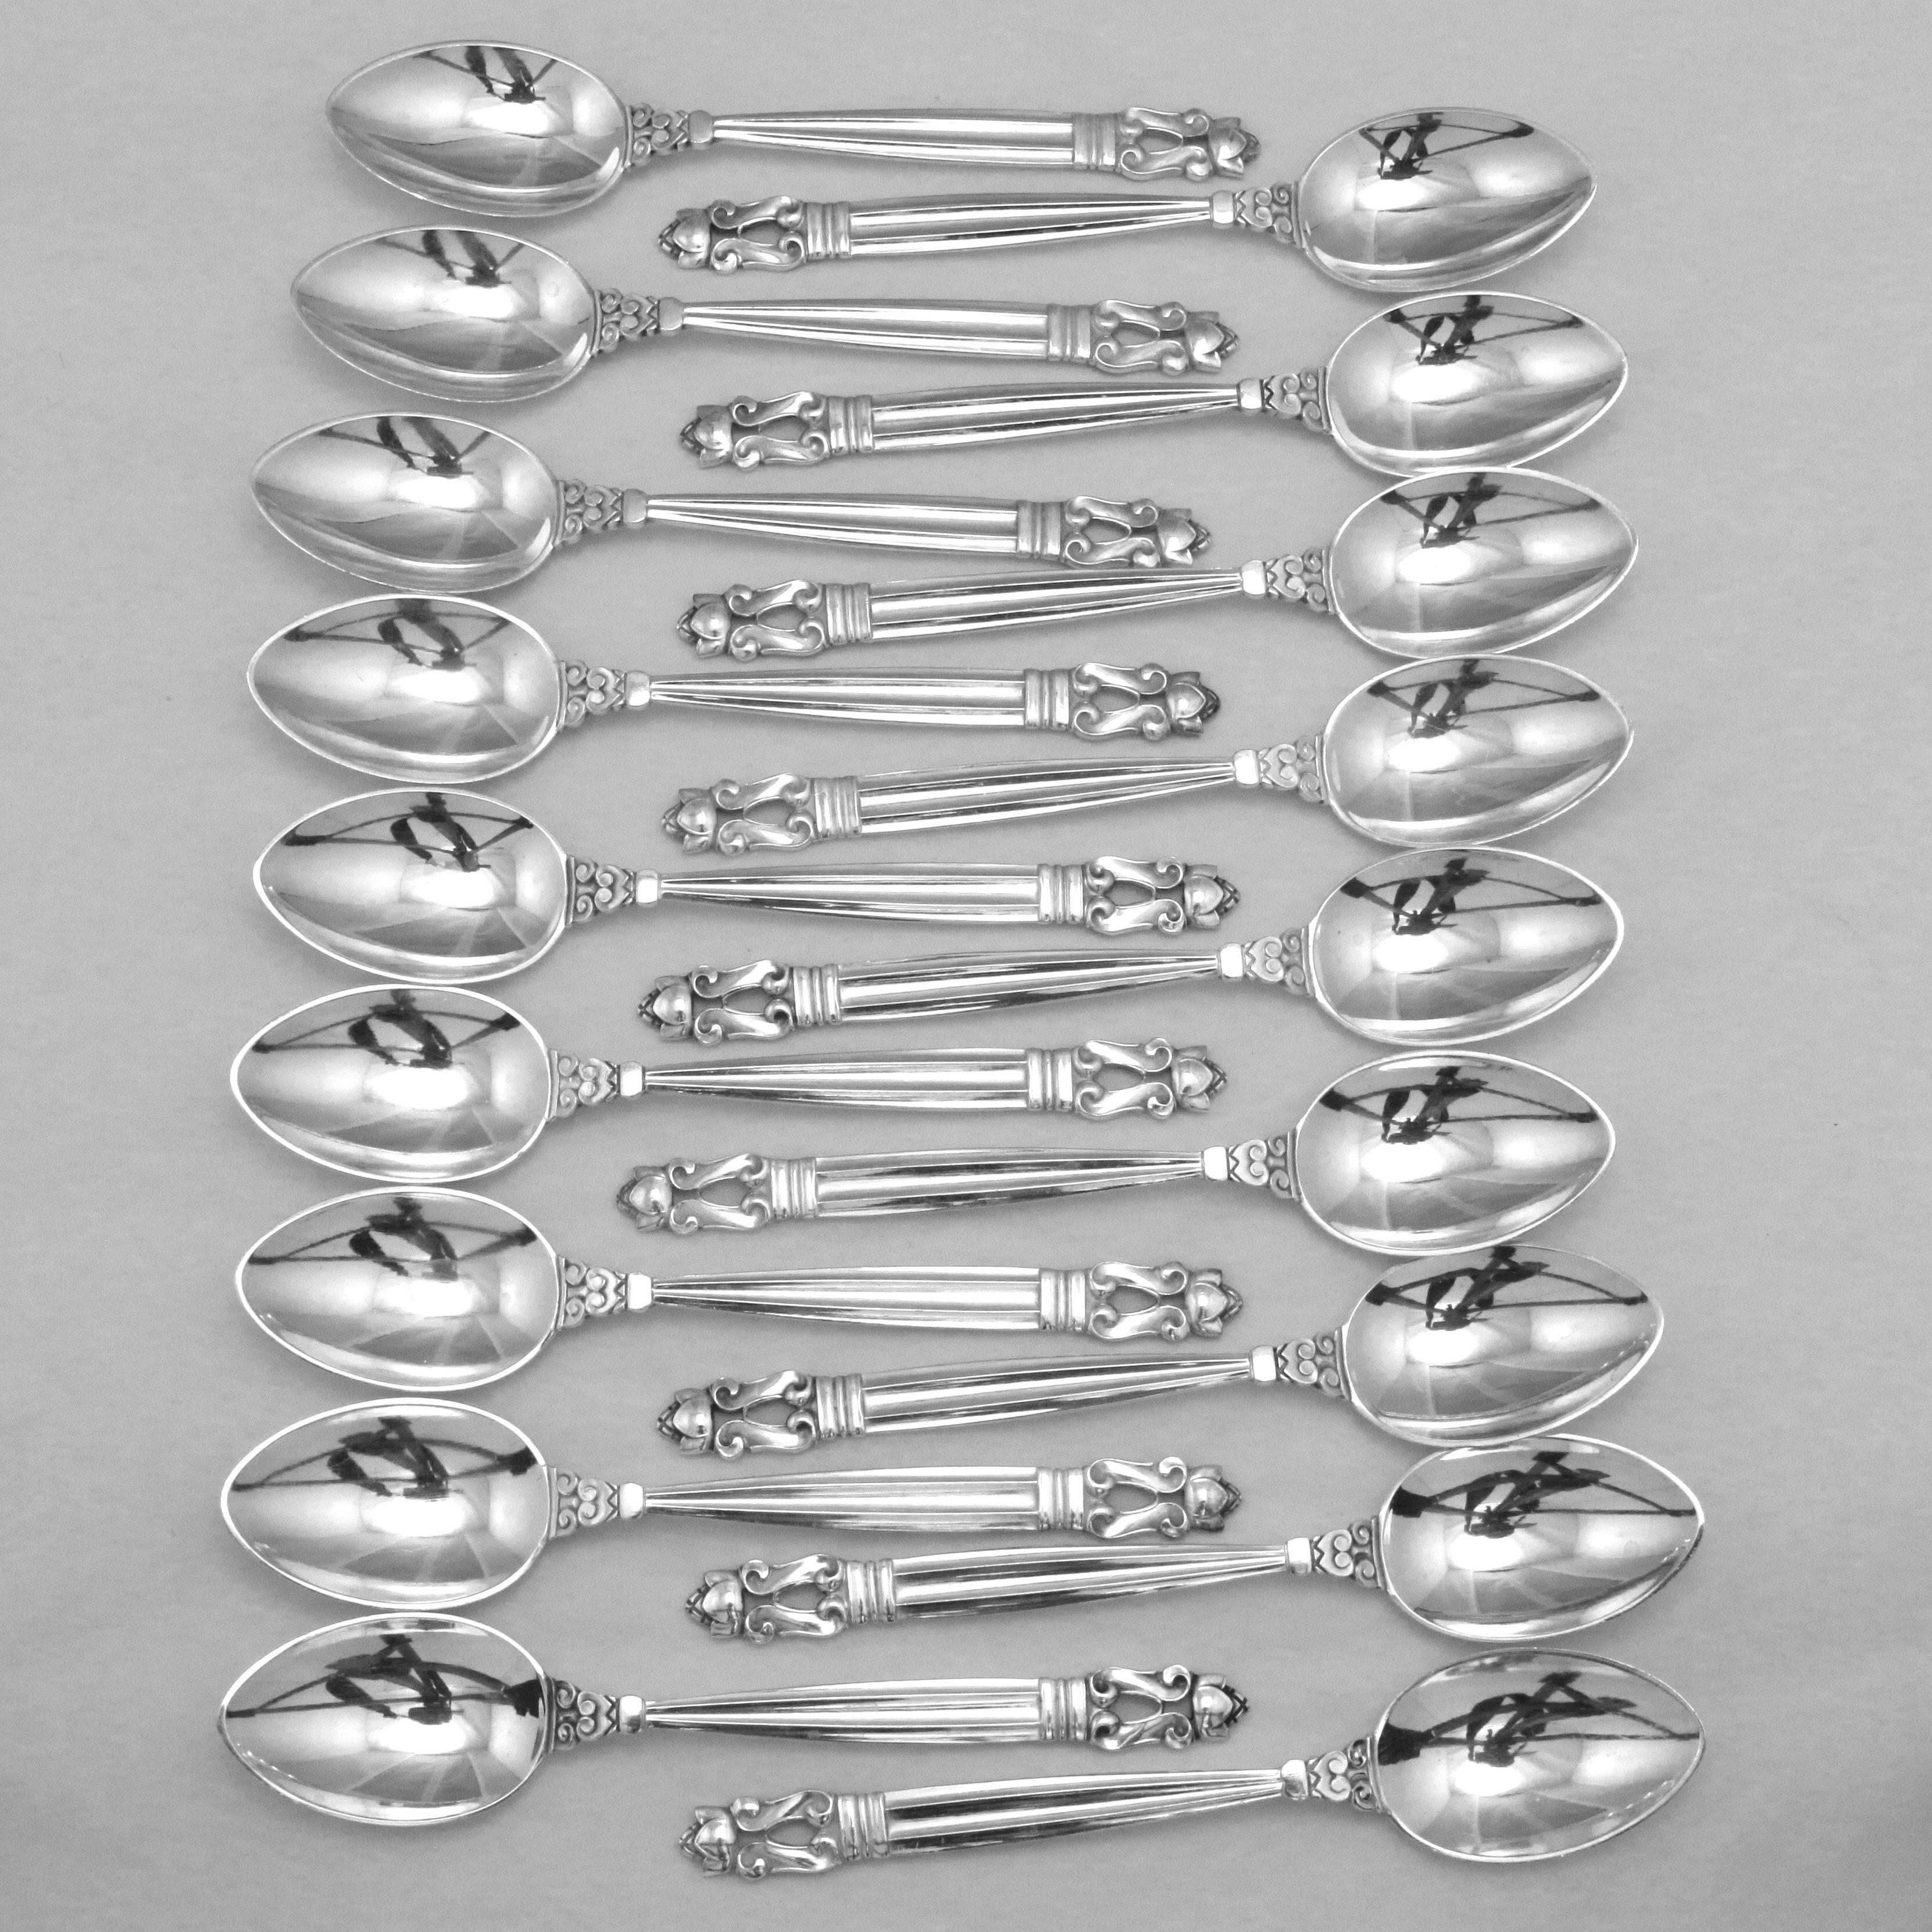 Georg Jensen acorn sterling silver flatware set for 18 persons.

122 pieces, set consisting of,
18 salad forks 7.5